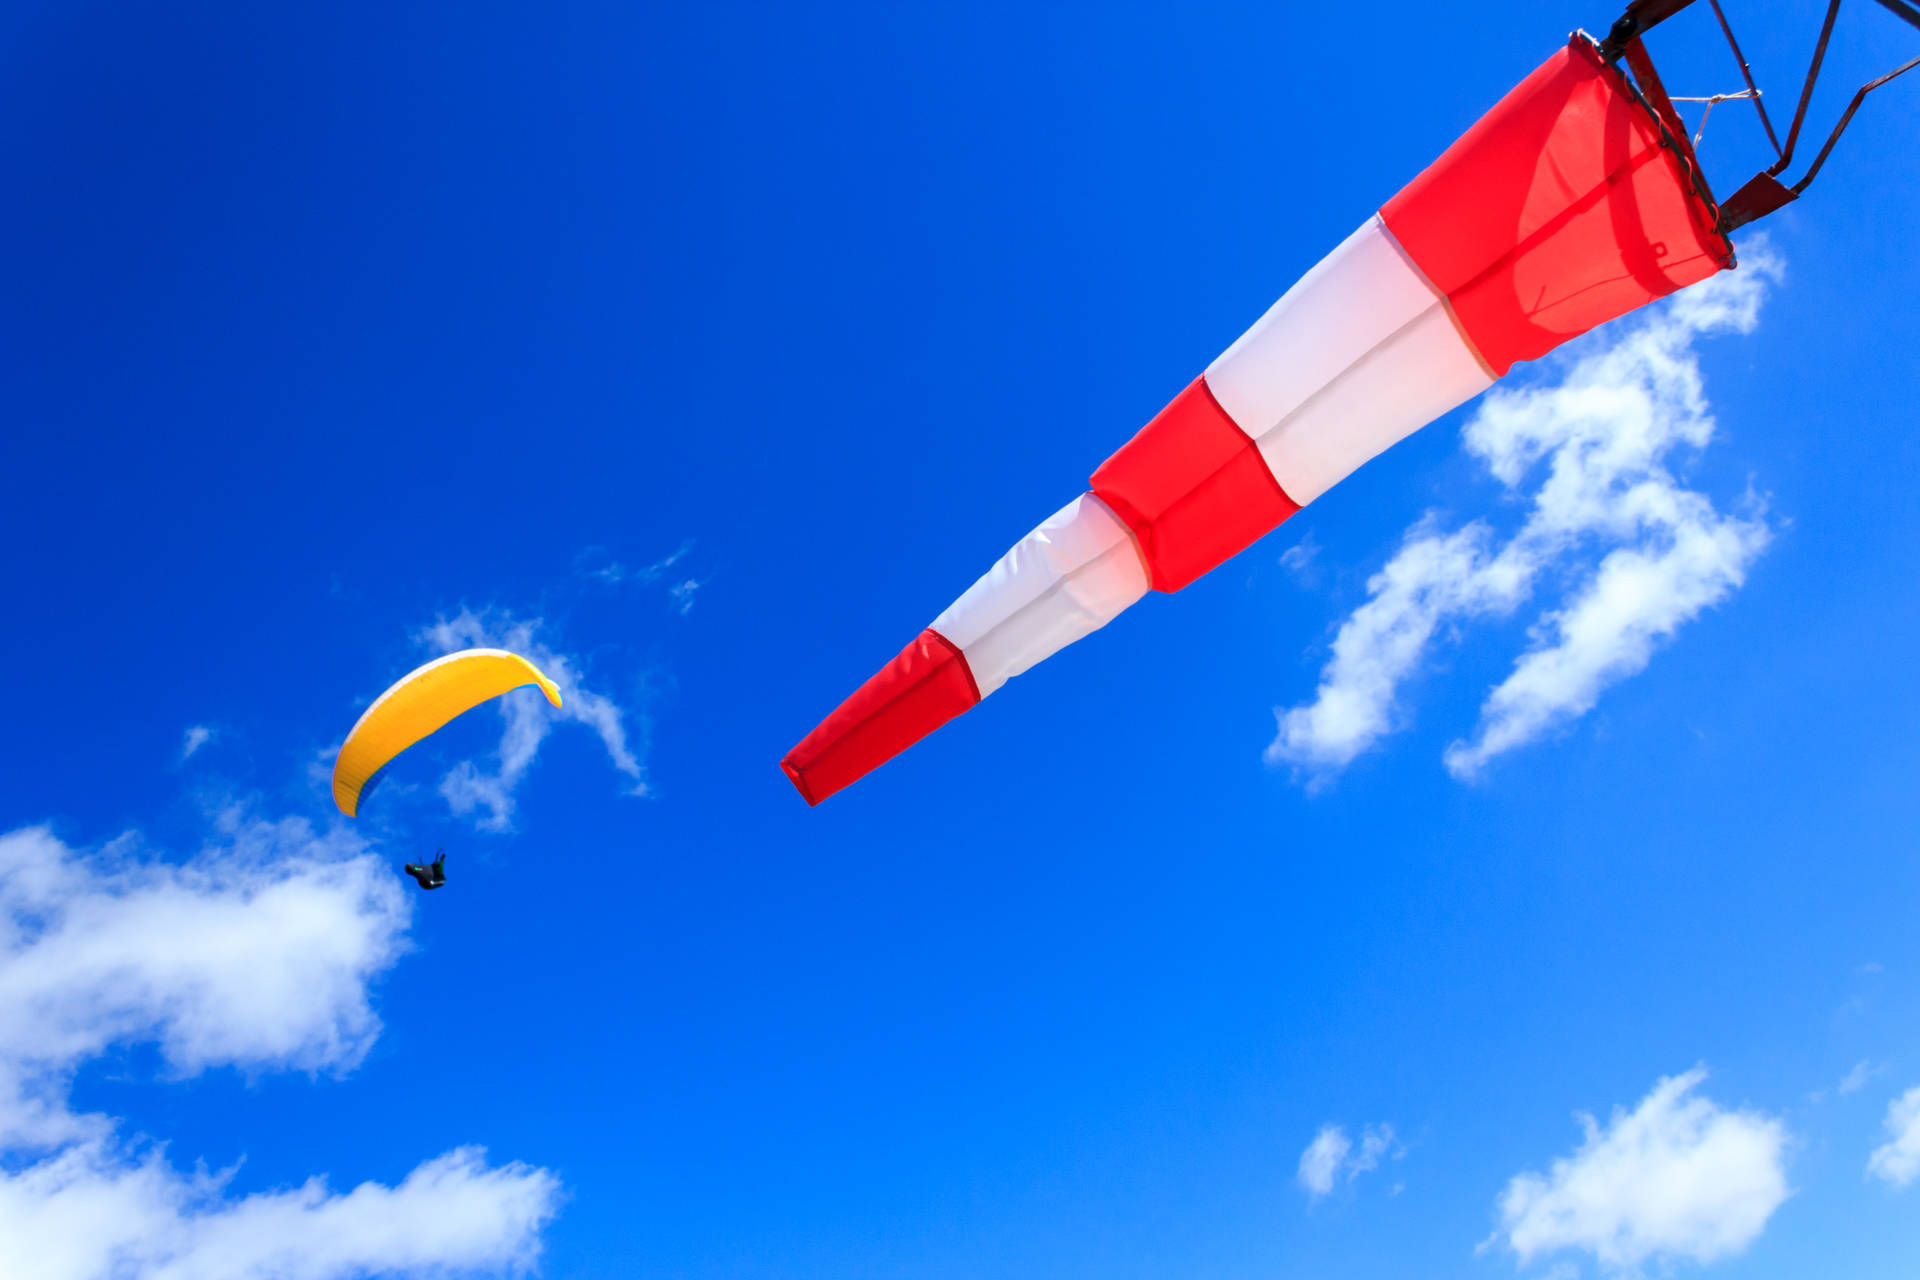 Paragliding Near Wind Indicator Flag